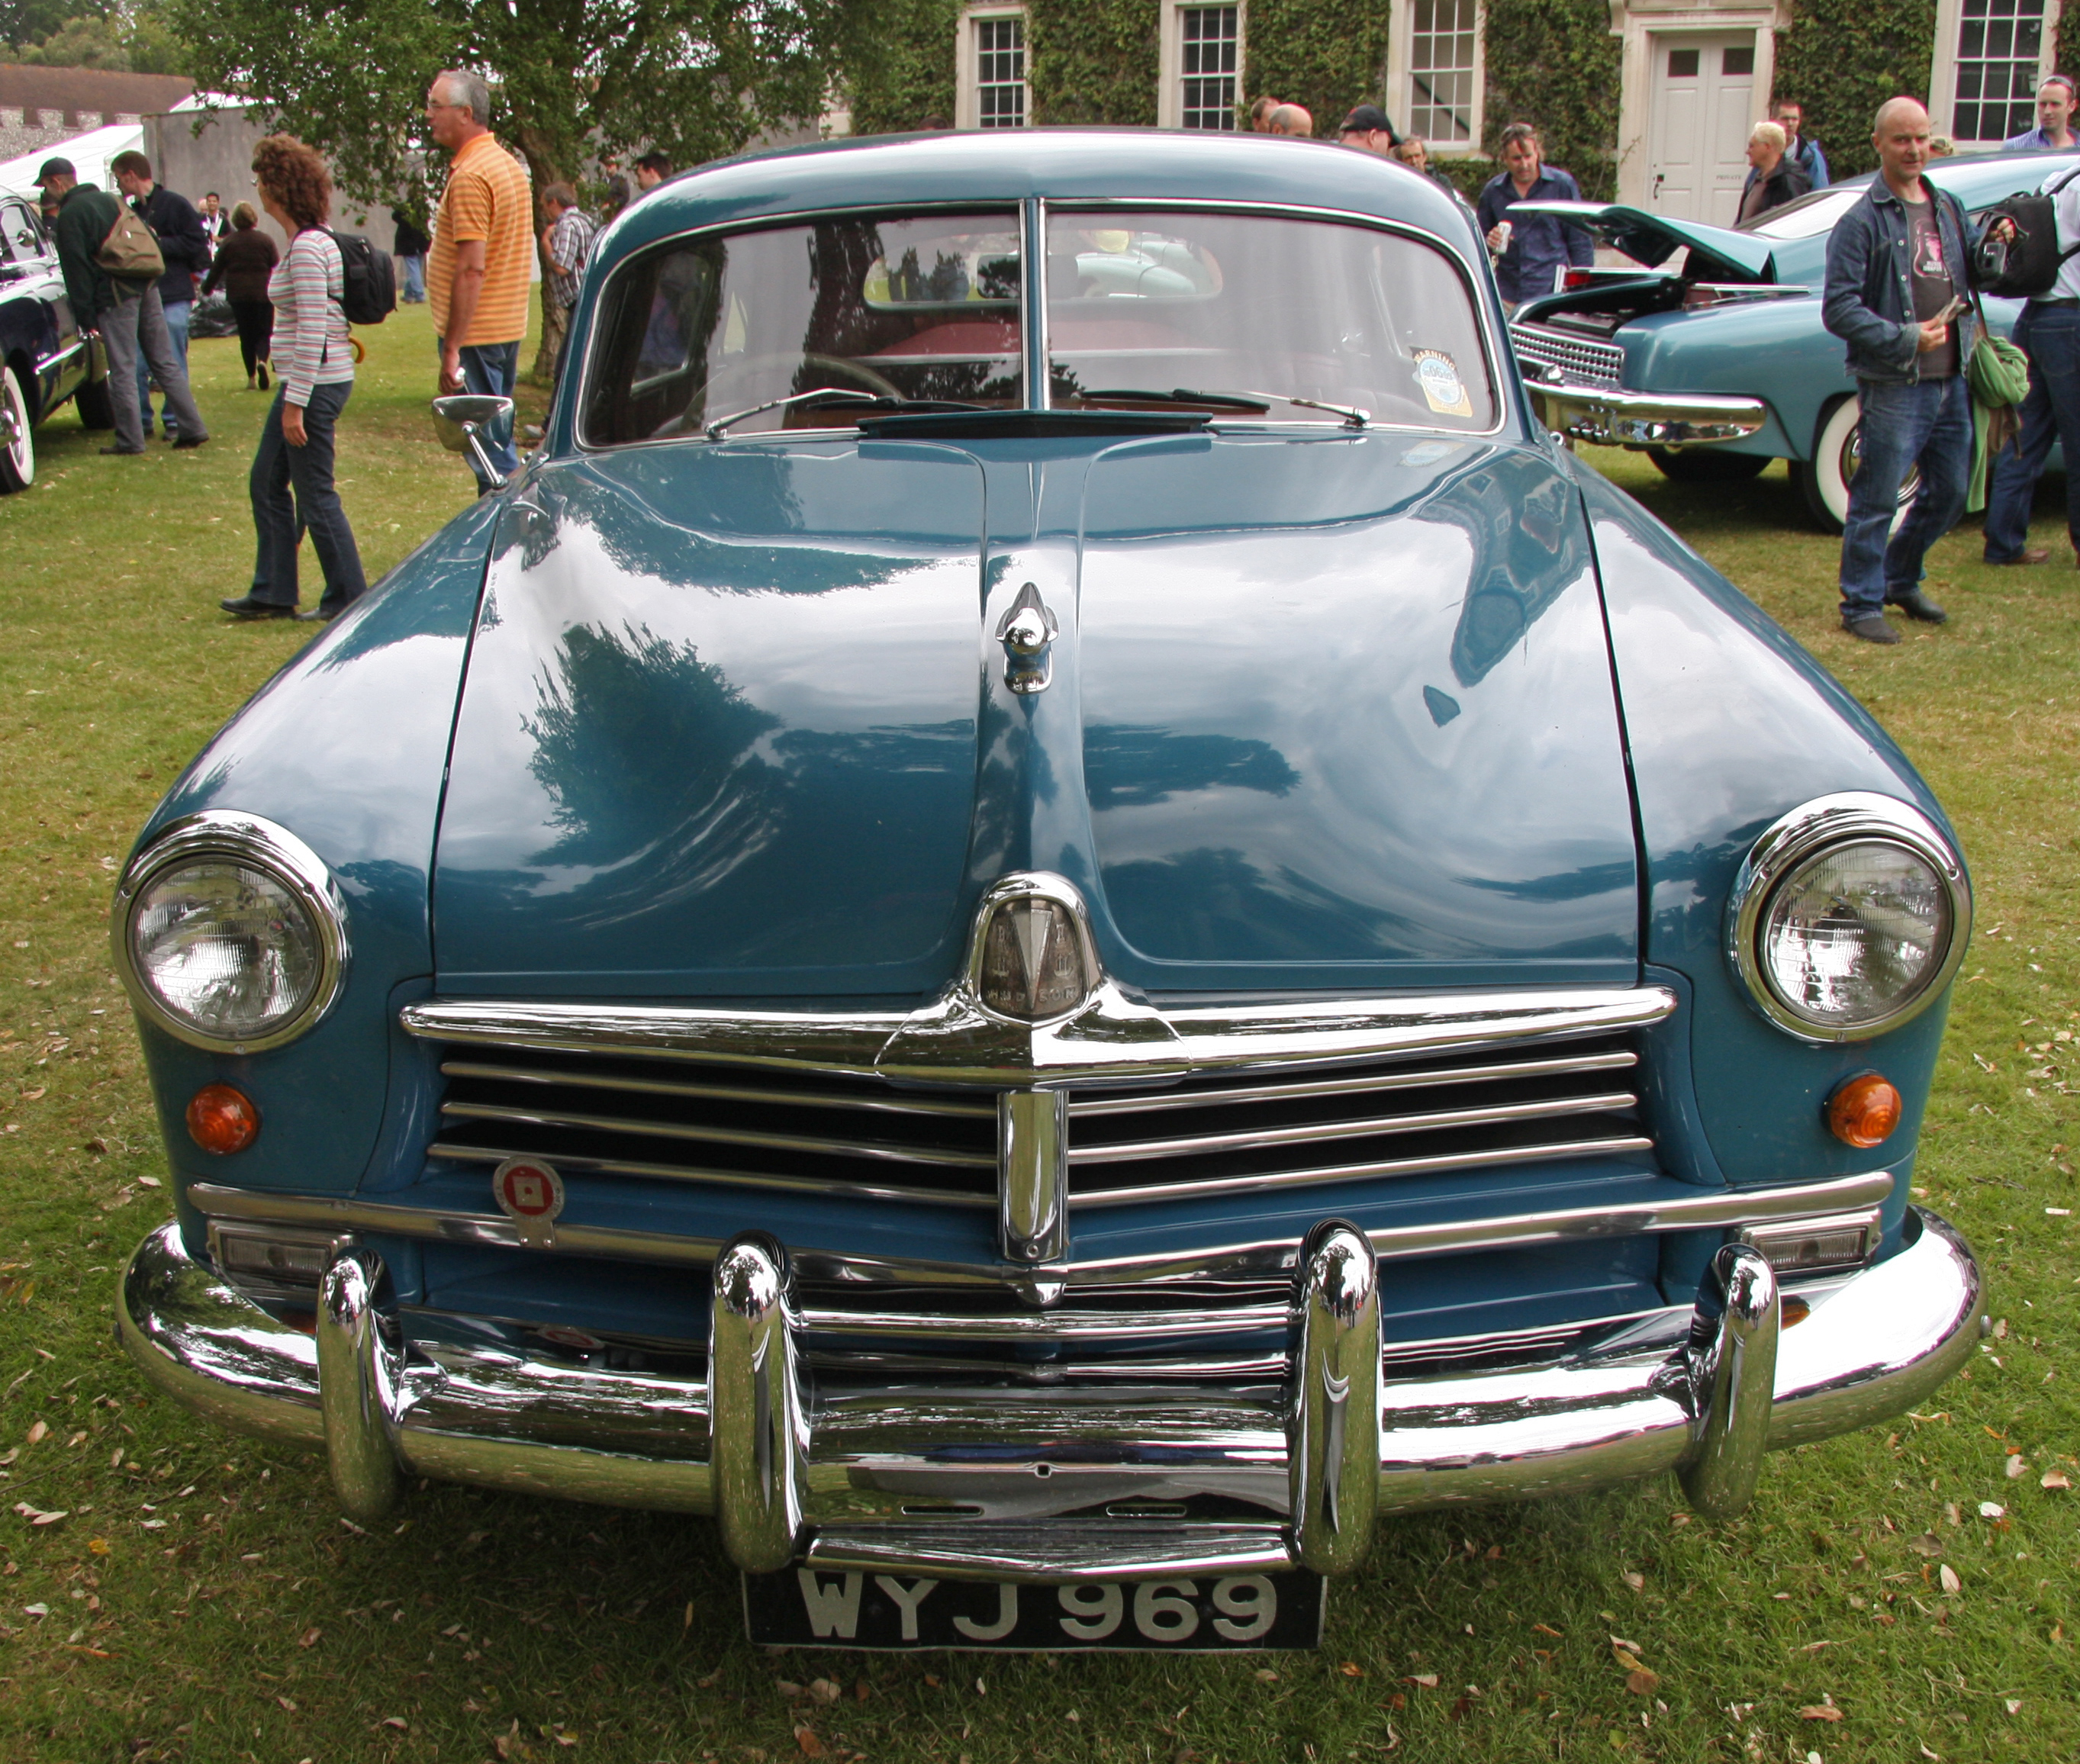 File:1949 Hudson Super Six - Flickr - exfordy.jpg - Wikimedia Commons